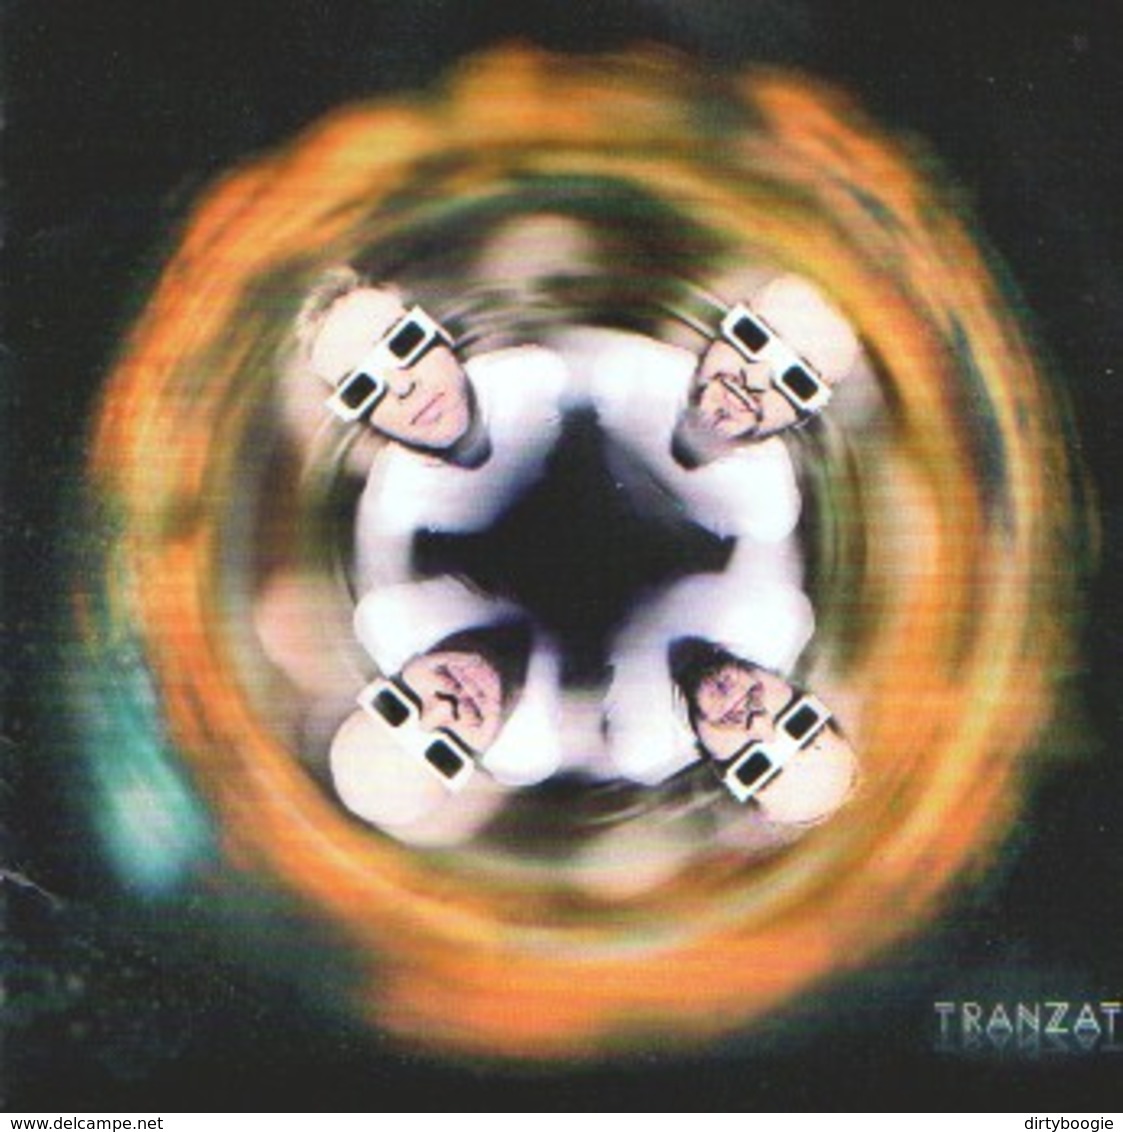 TRANZAT - The Great Disaster - CD - METAL PROGRESSIF - Hard Rock En Metal